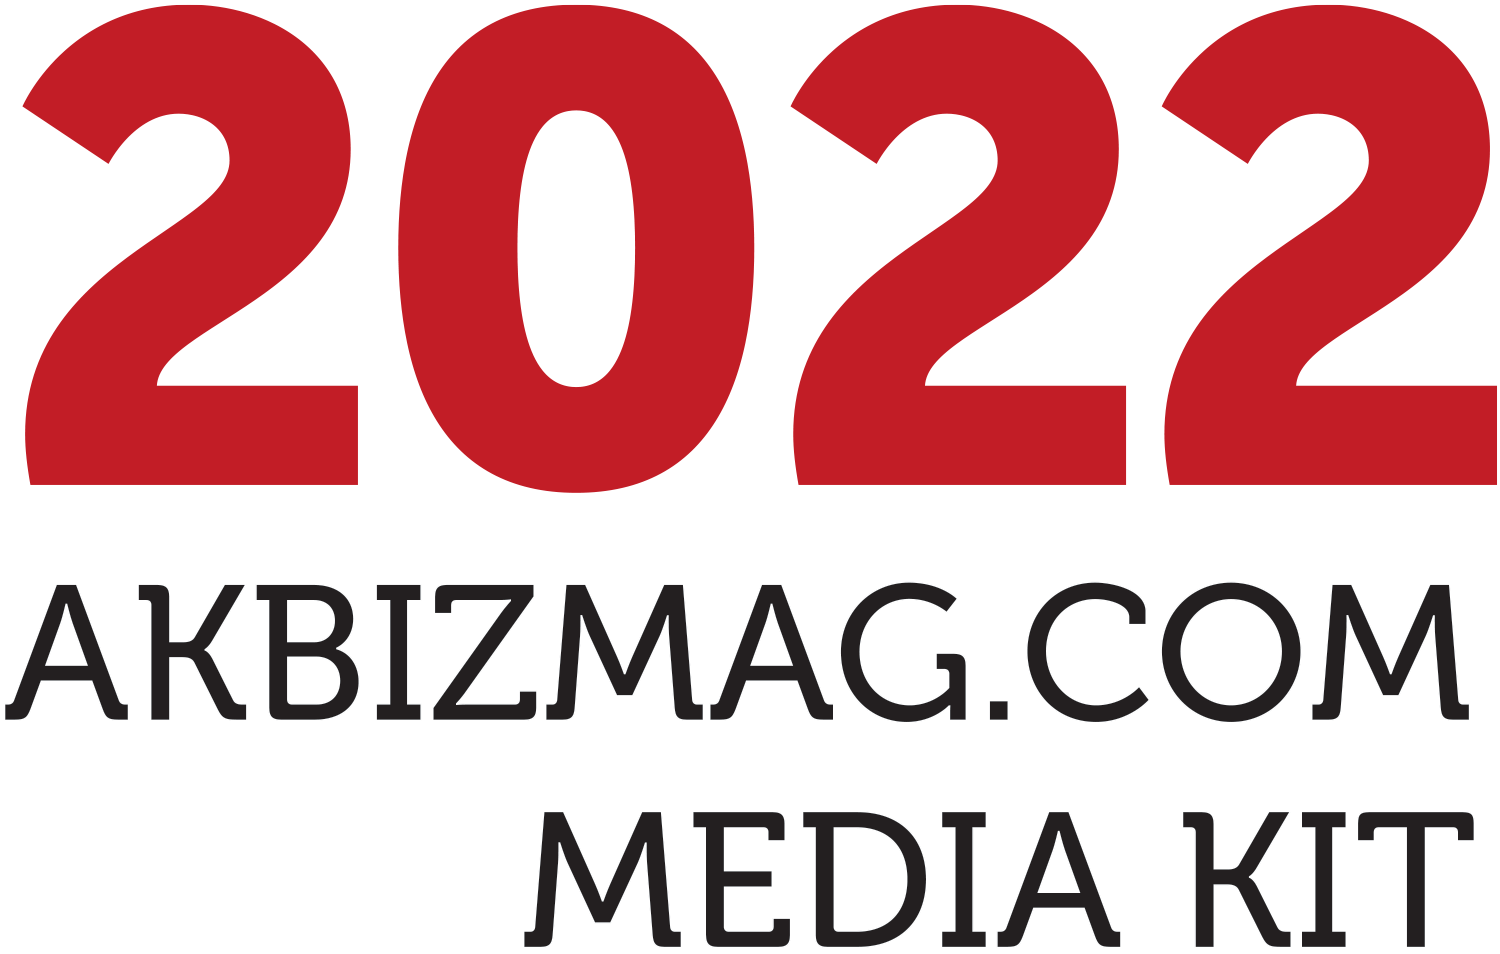 2022 Akbizmag.com Media Kit